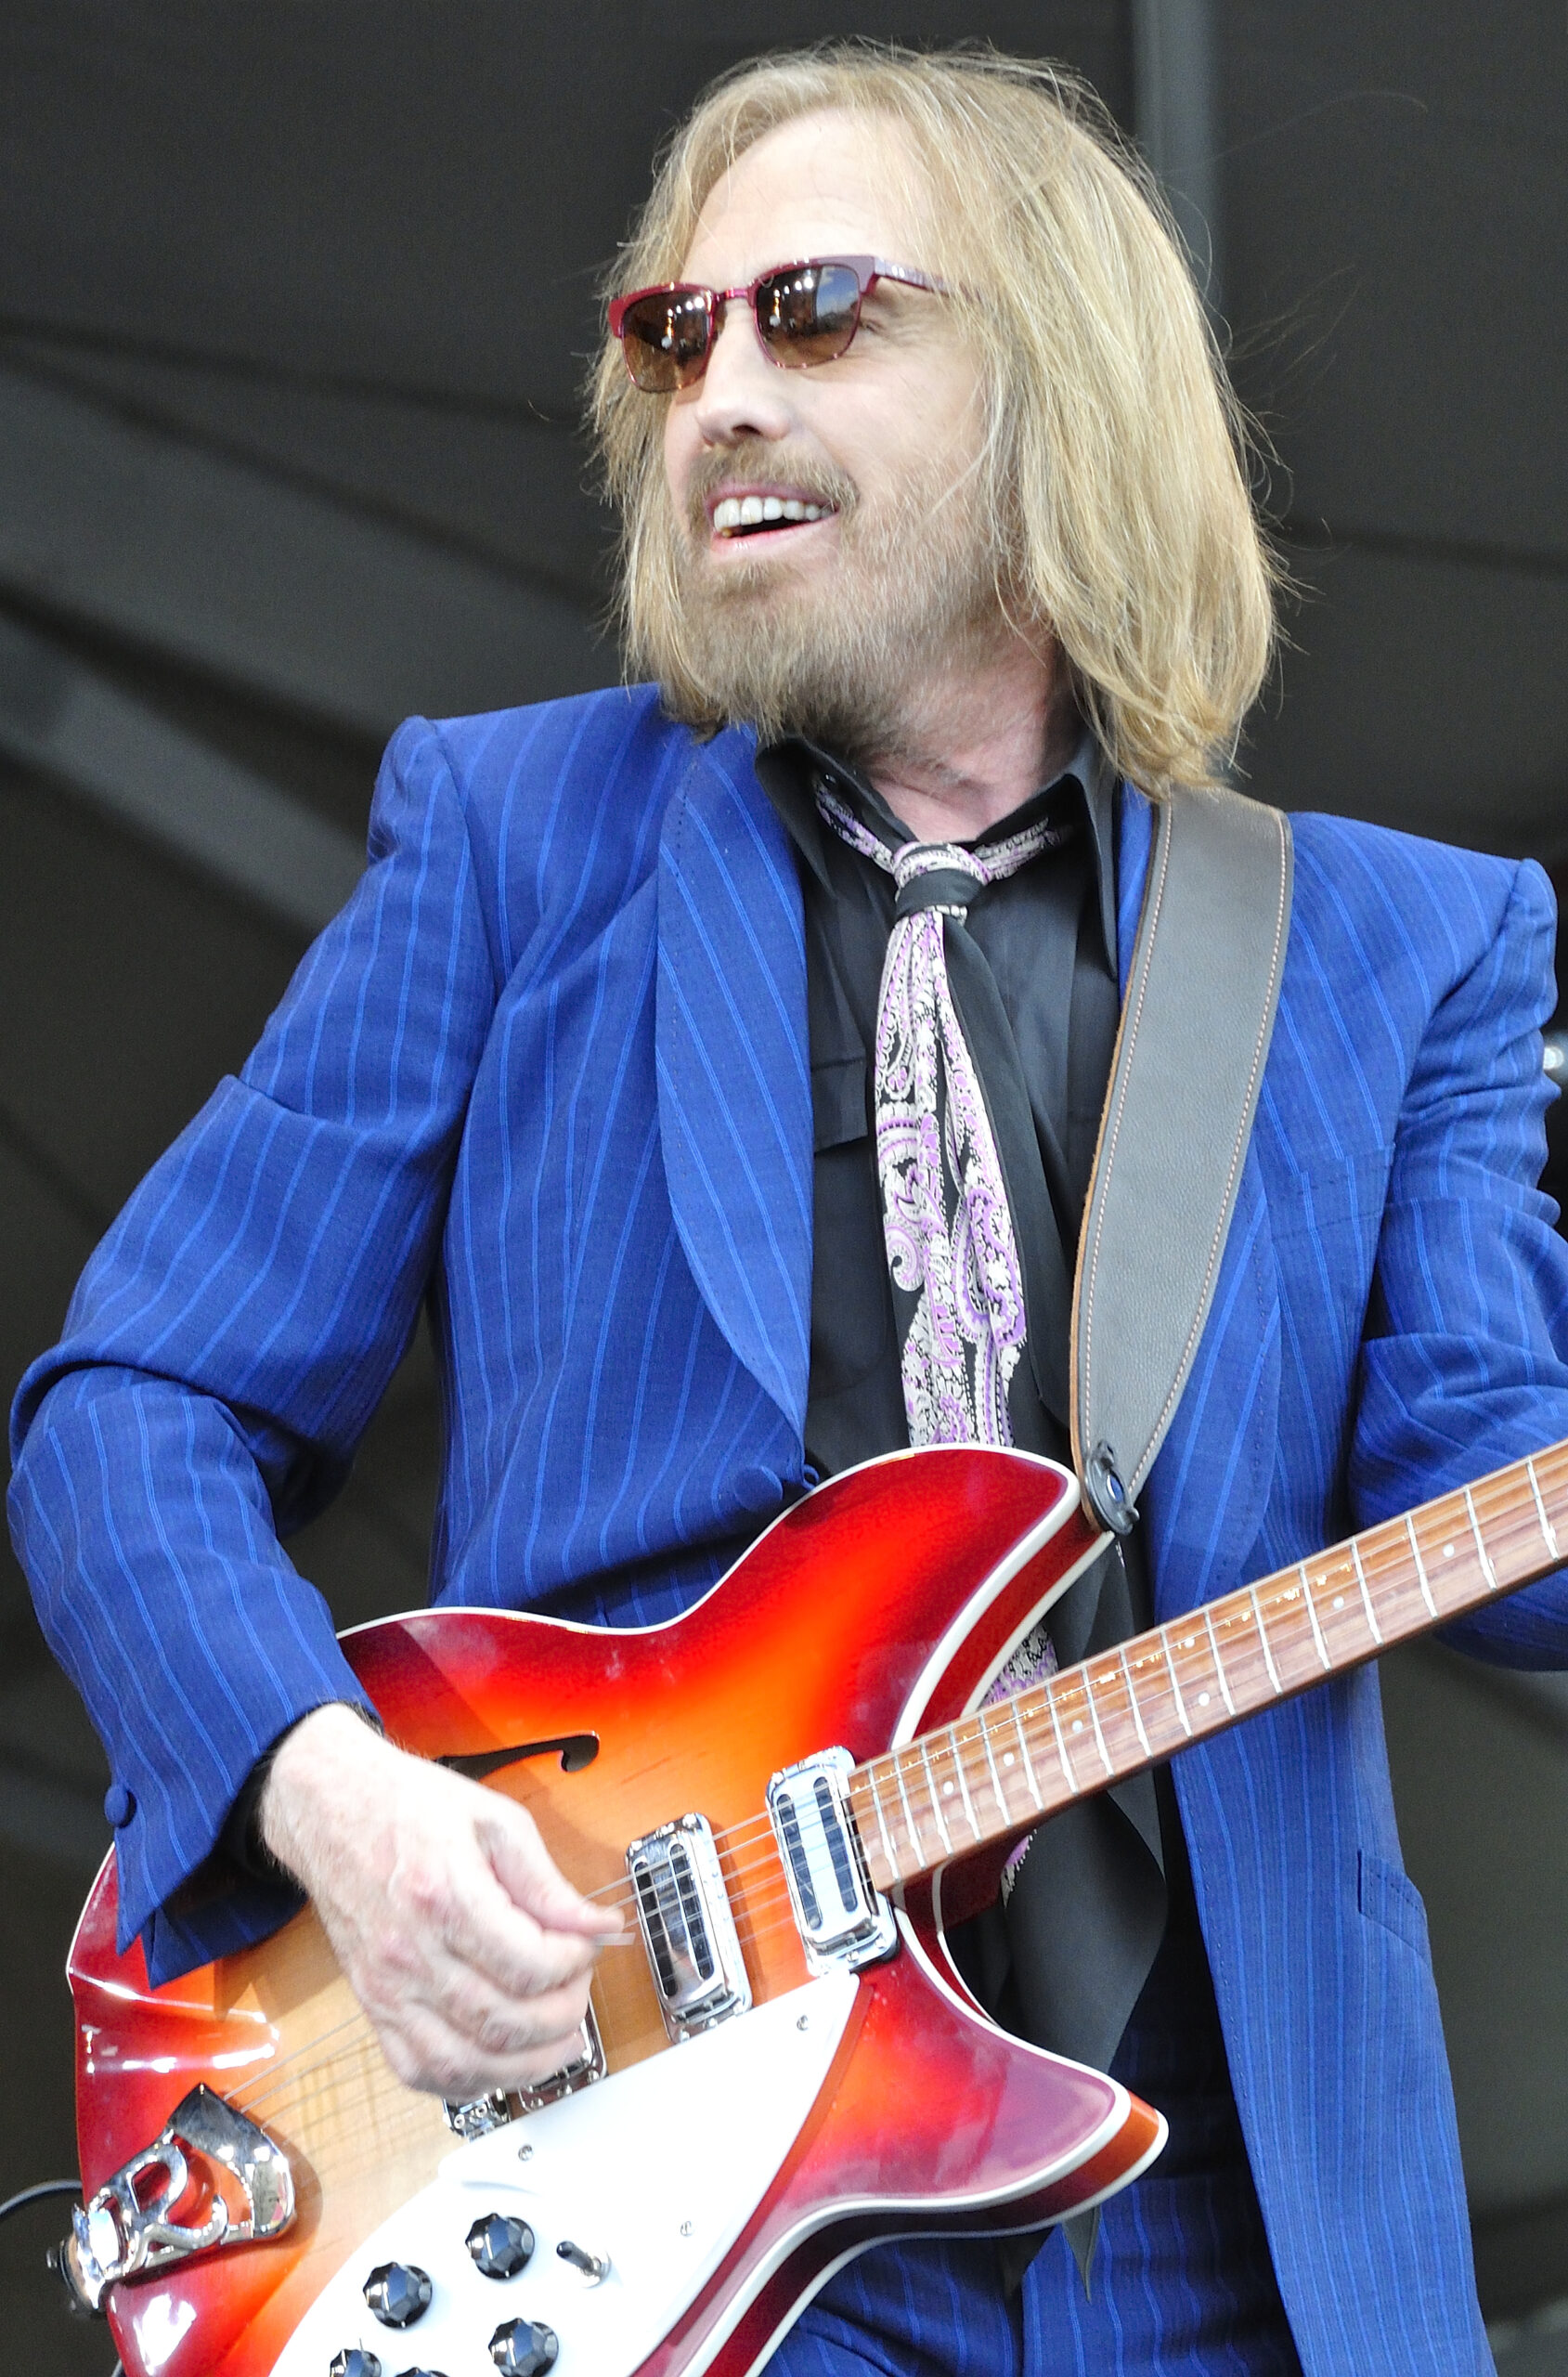 Tom Petty: 50 Greatest Songs